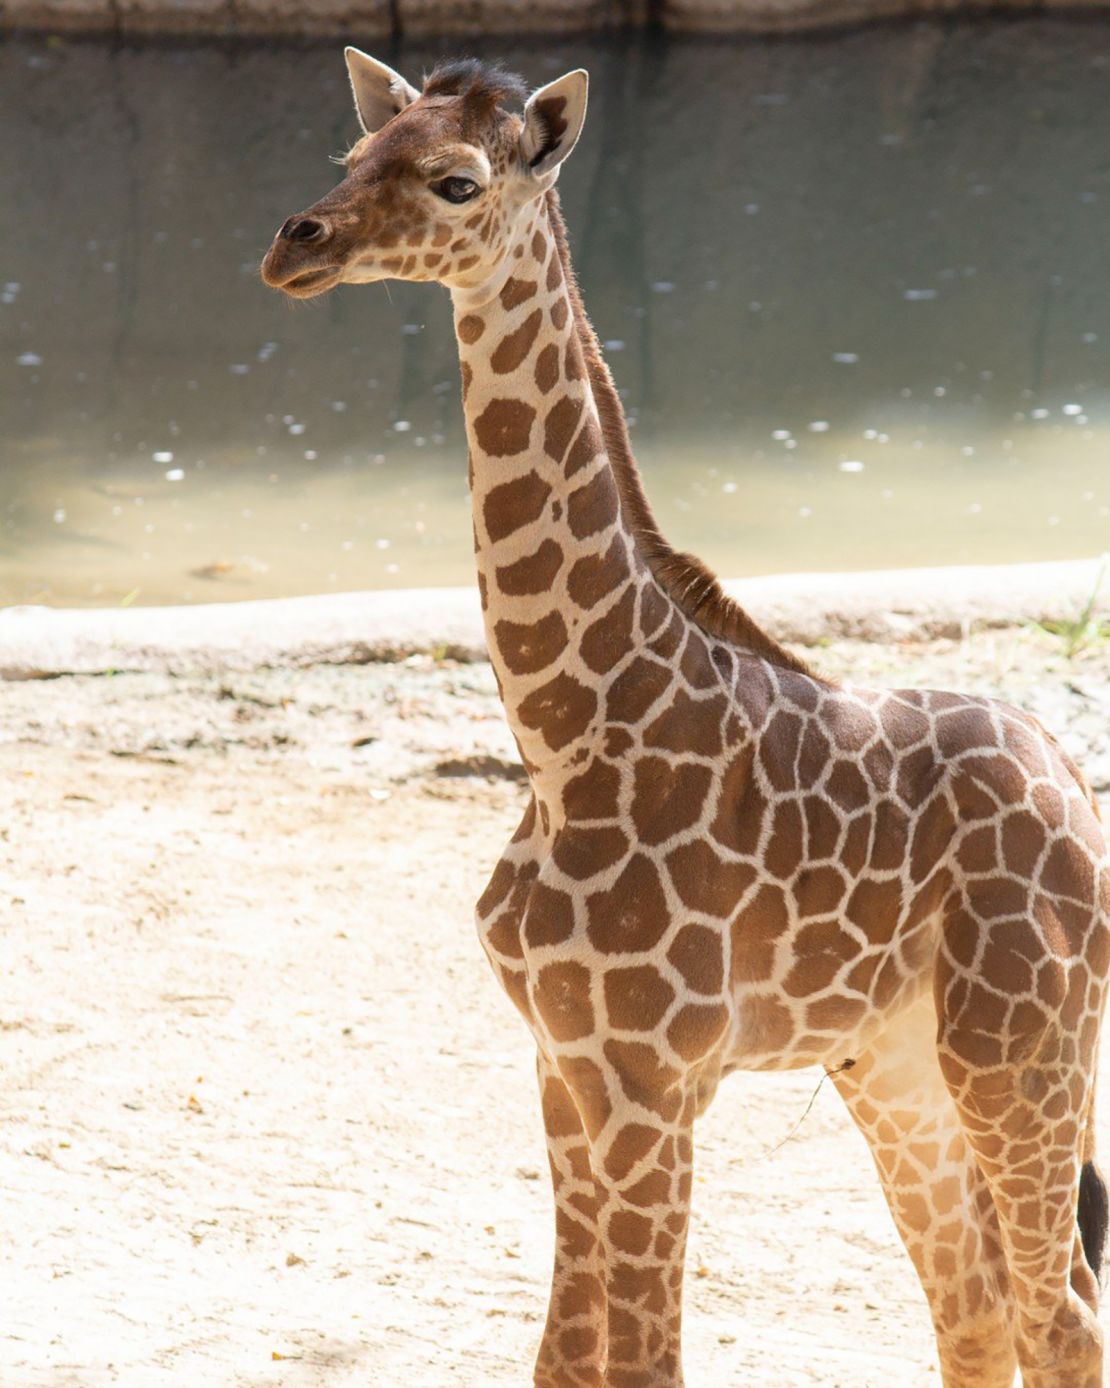 Three-month-old giraffe calf Marekani died October 3.